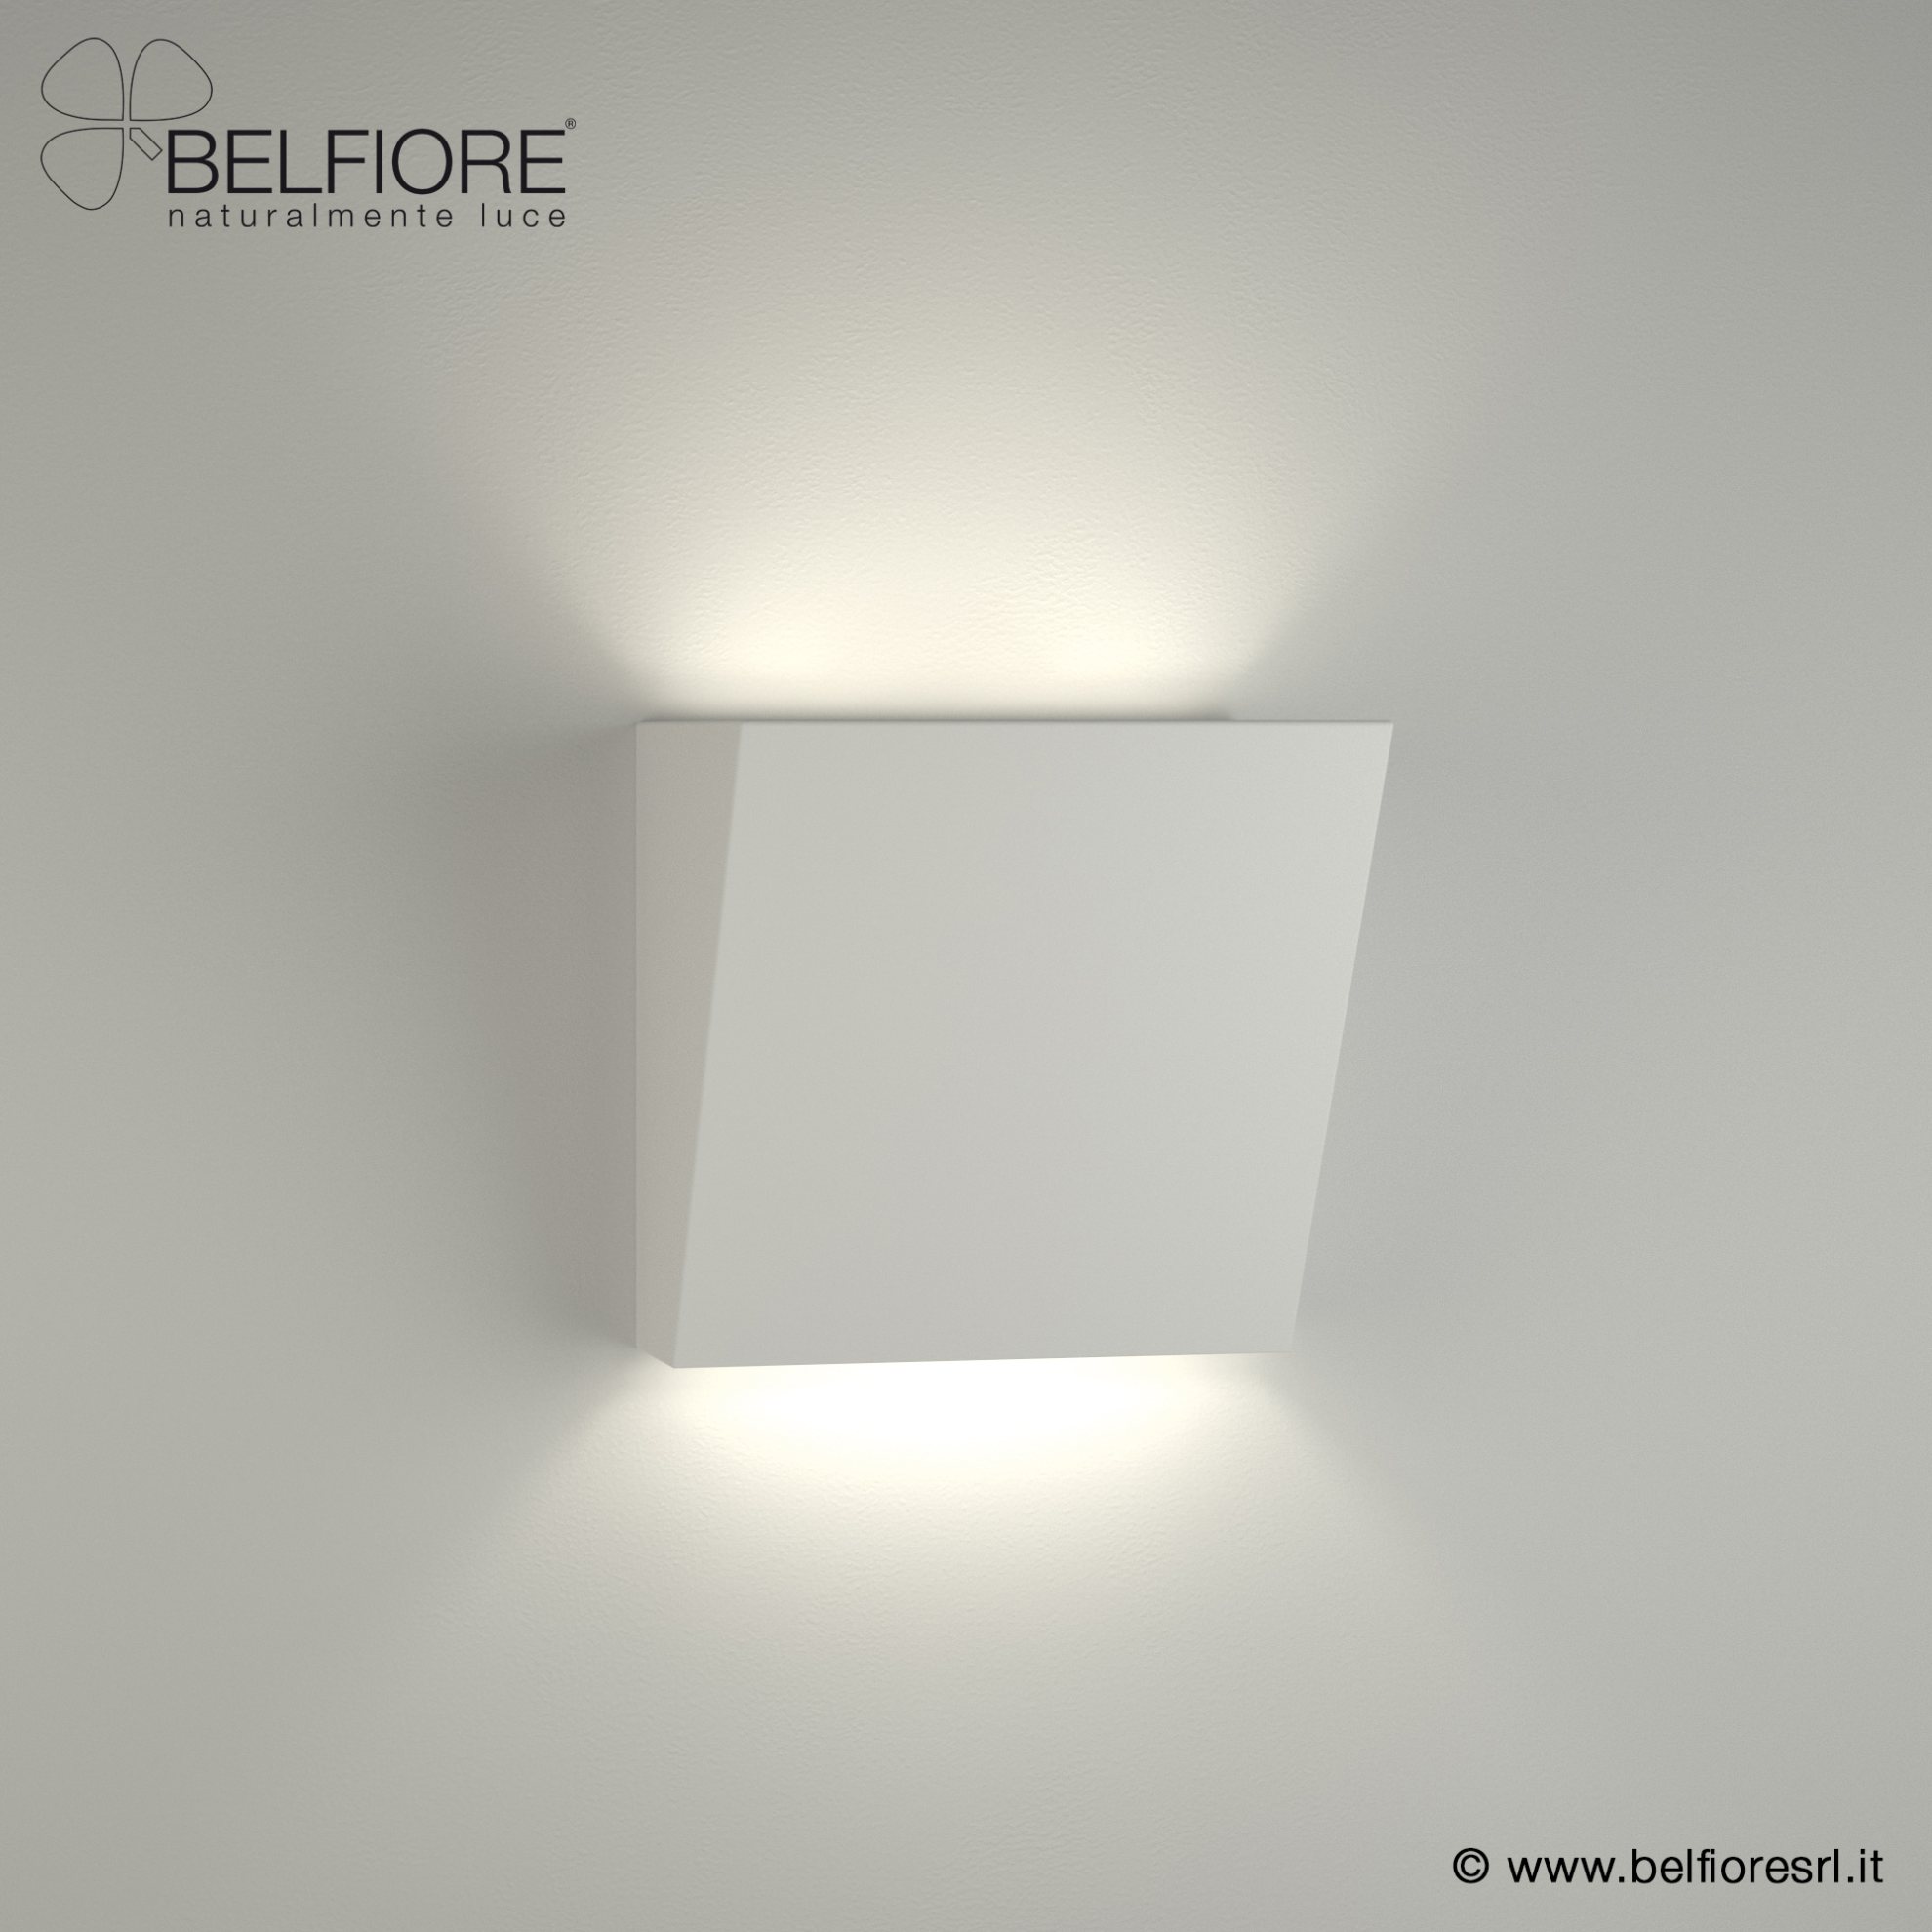 Gipswandlampe 2601A108 von Belfiore